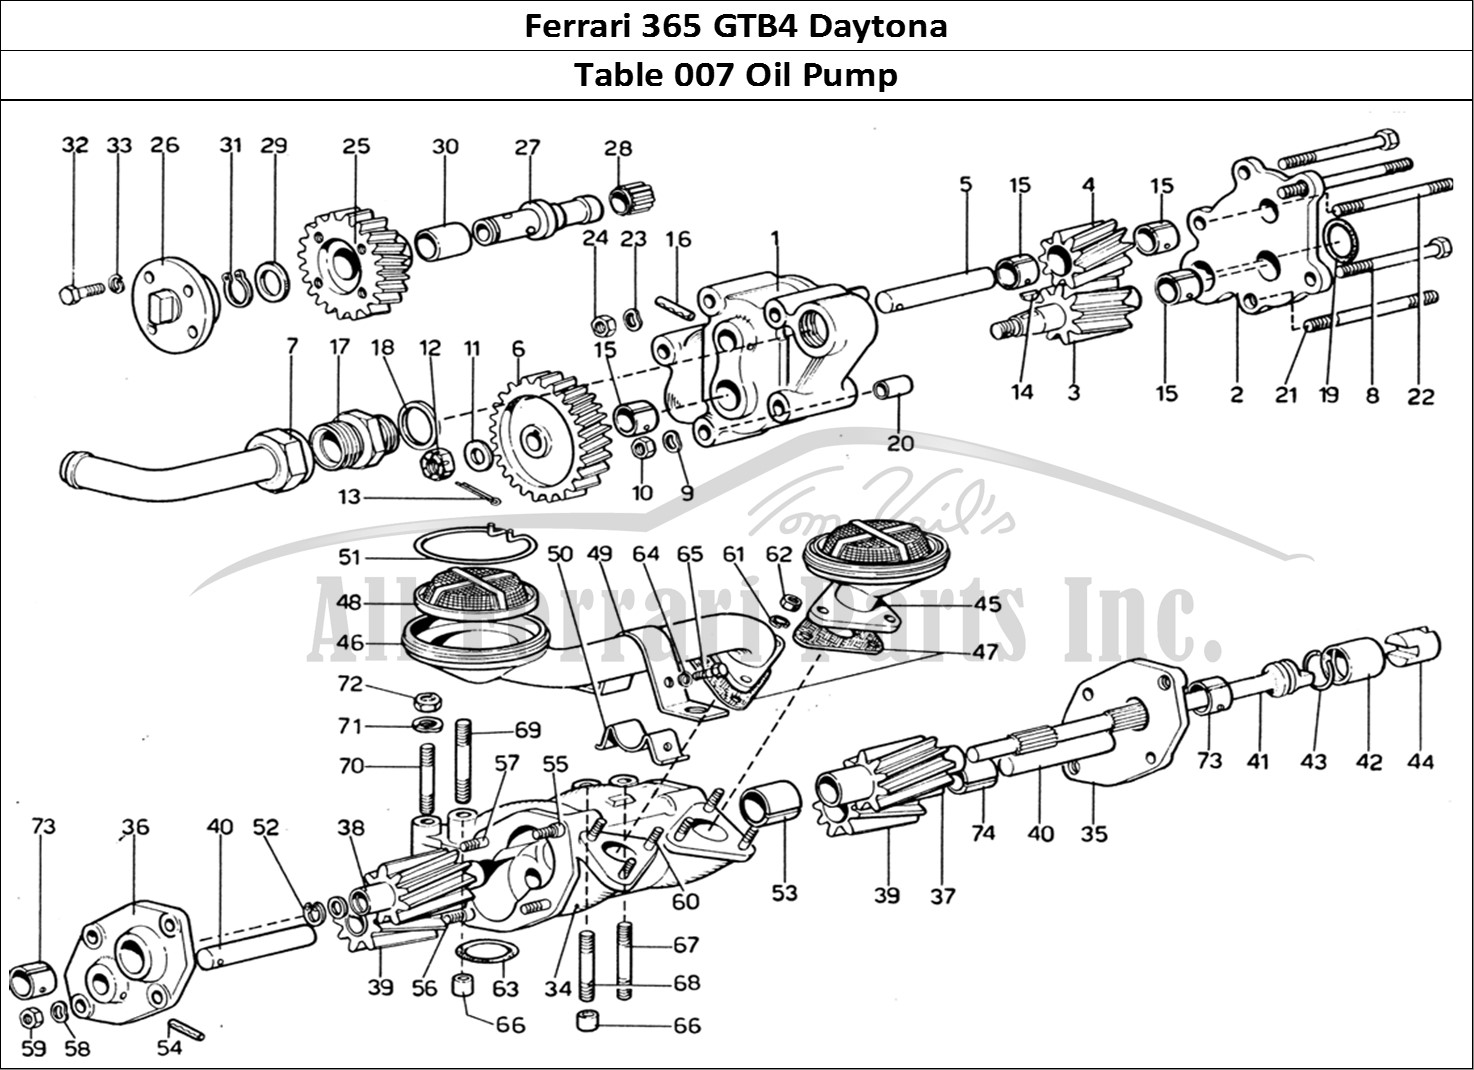 Ferrari Parts Ferrari 365 GTB4 Daytona (1969) Page 007 Engine Oil Pump